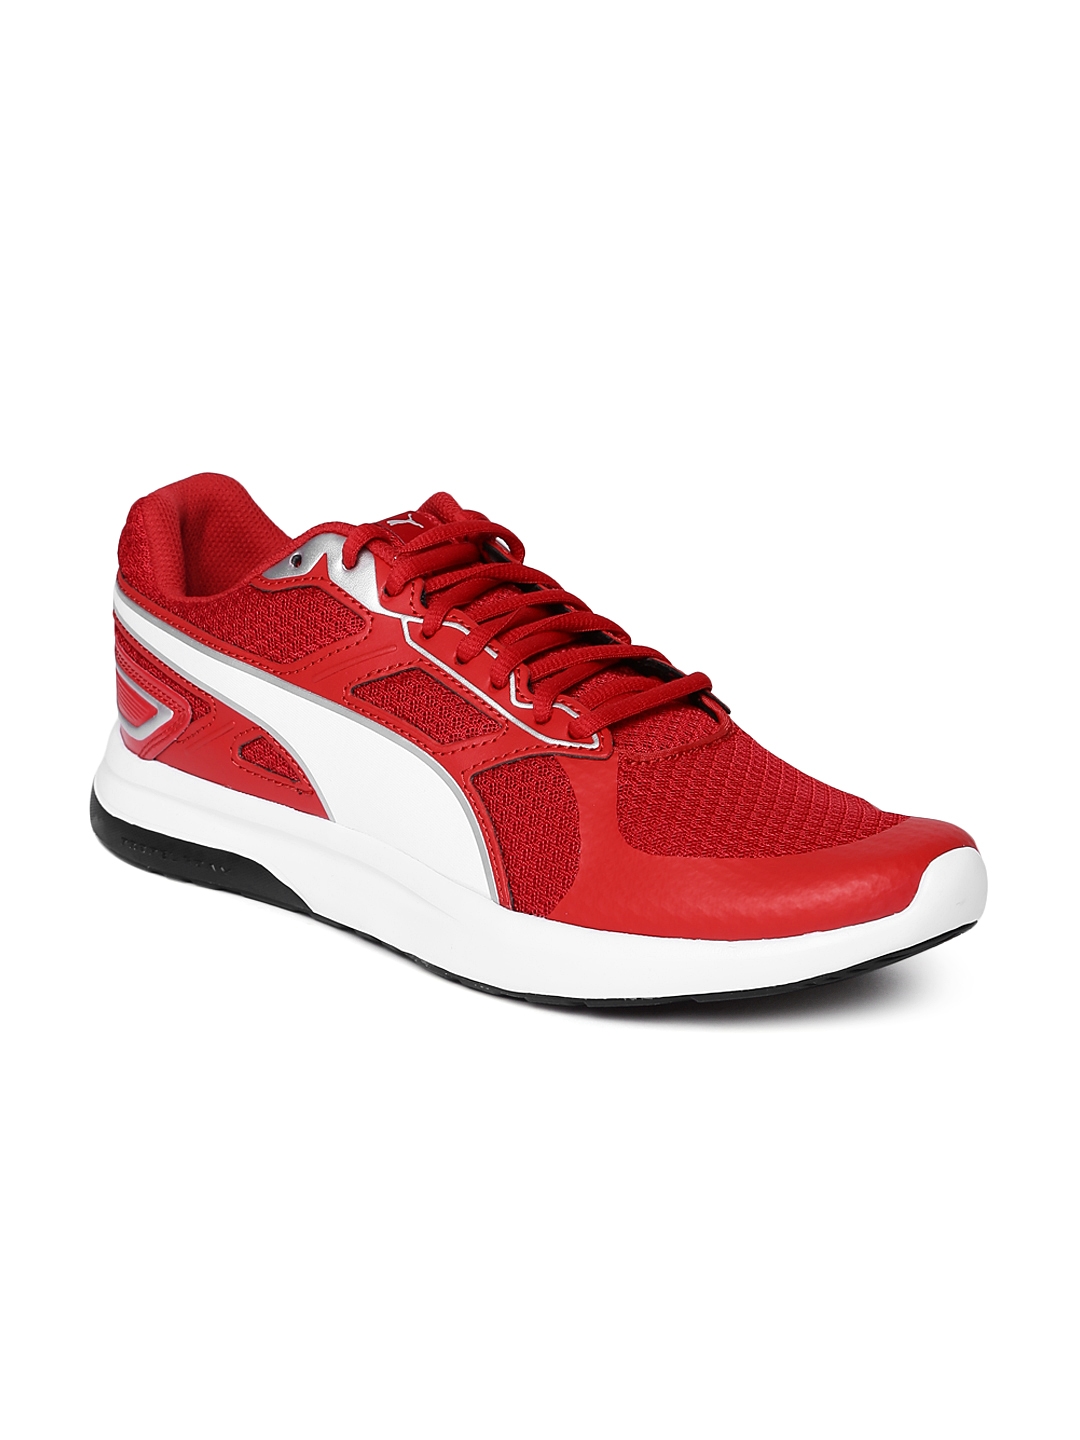 Buy Puma Men Red Escaper Tech Sneakers 